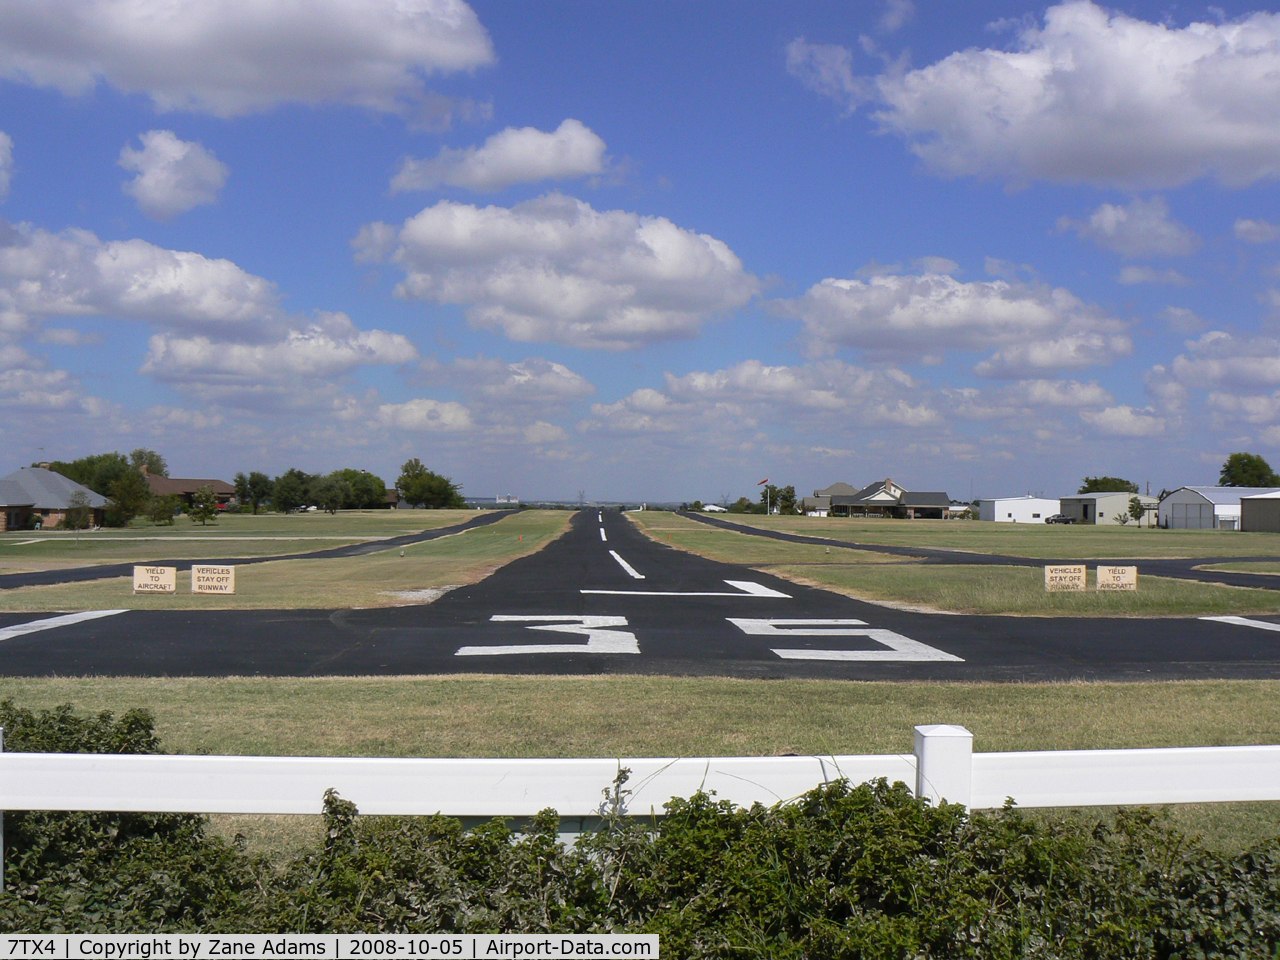 Hillcrest Airport (7TX4) - Hillcrest Private Community Airport